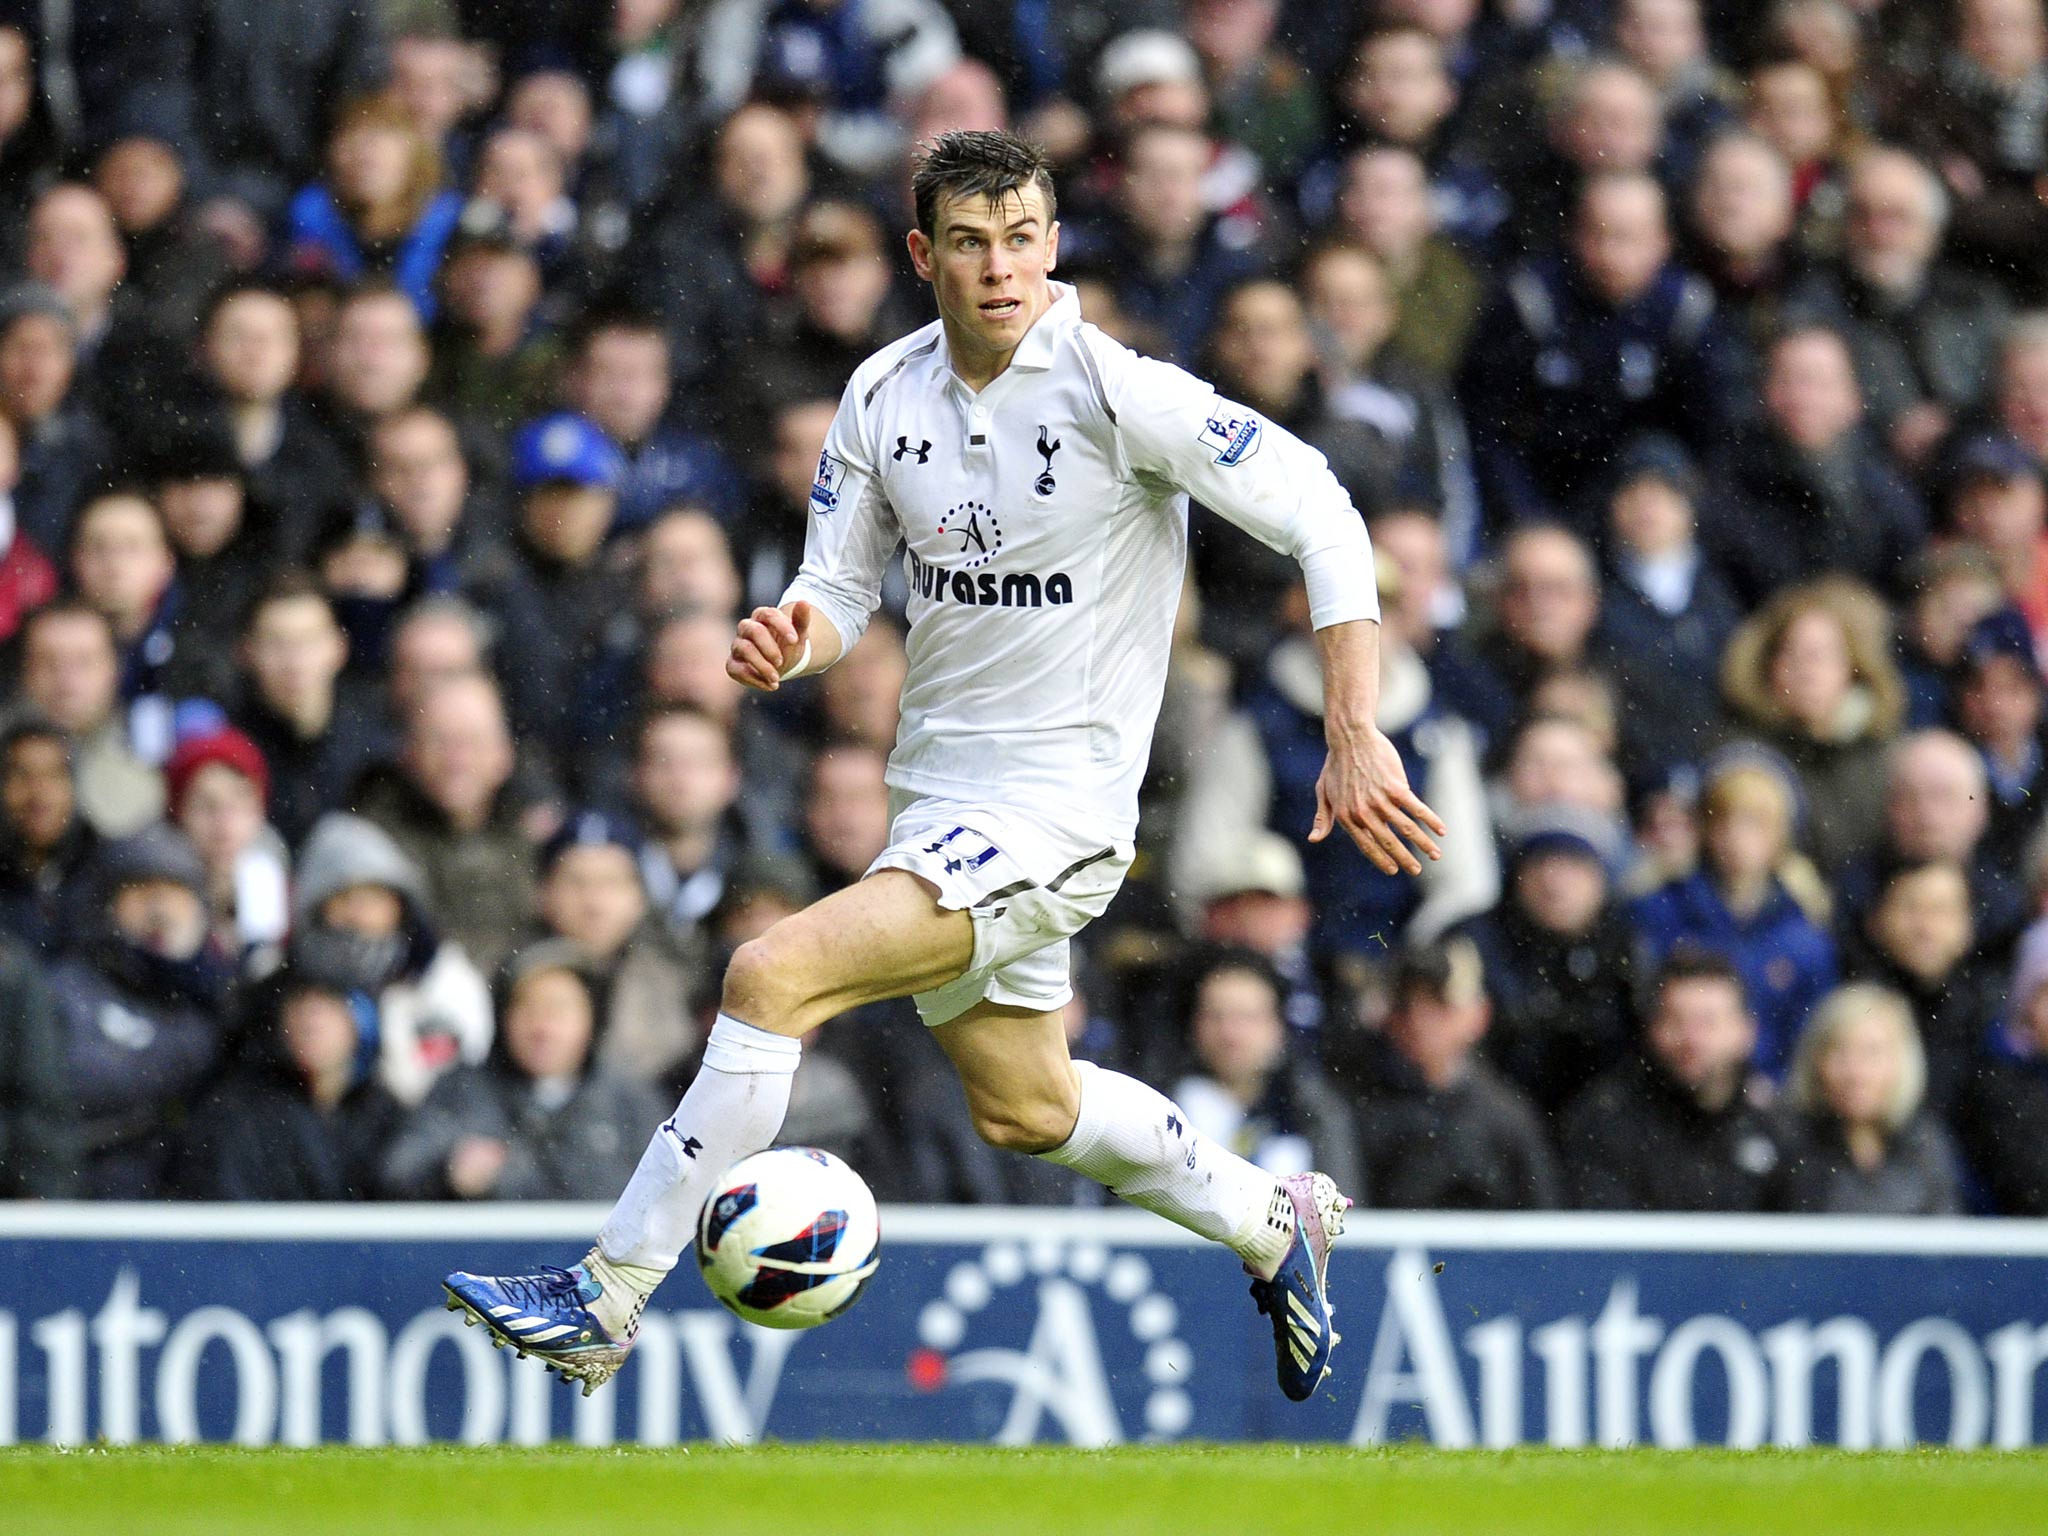 Having Gareth Bale among their ranks will do Tottenham no harm